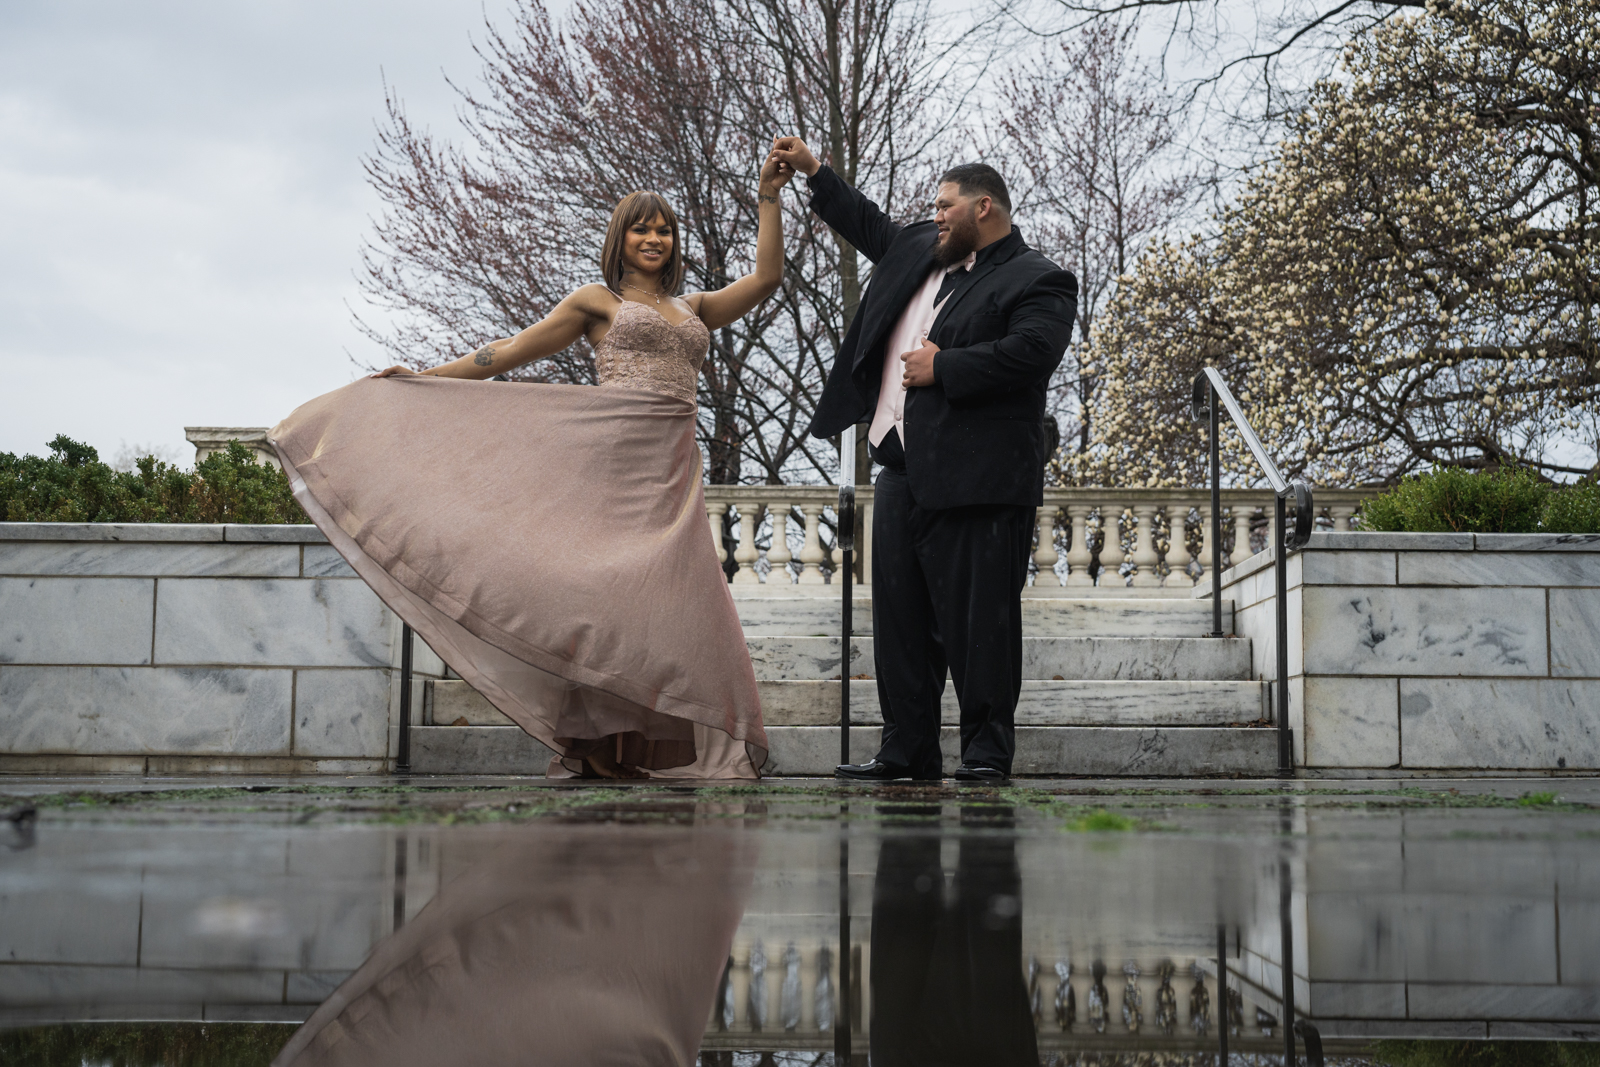 Rain or Shine, Sahara and Kekoa’s Engagement Photo Session at Cleveland Art Museum Shines!